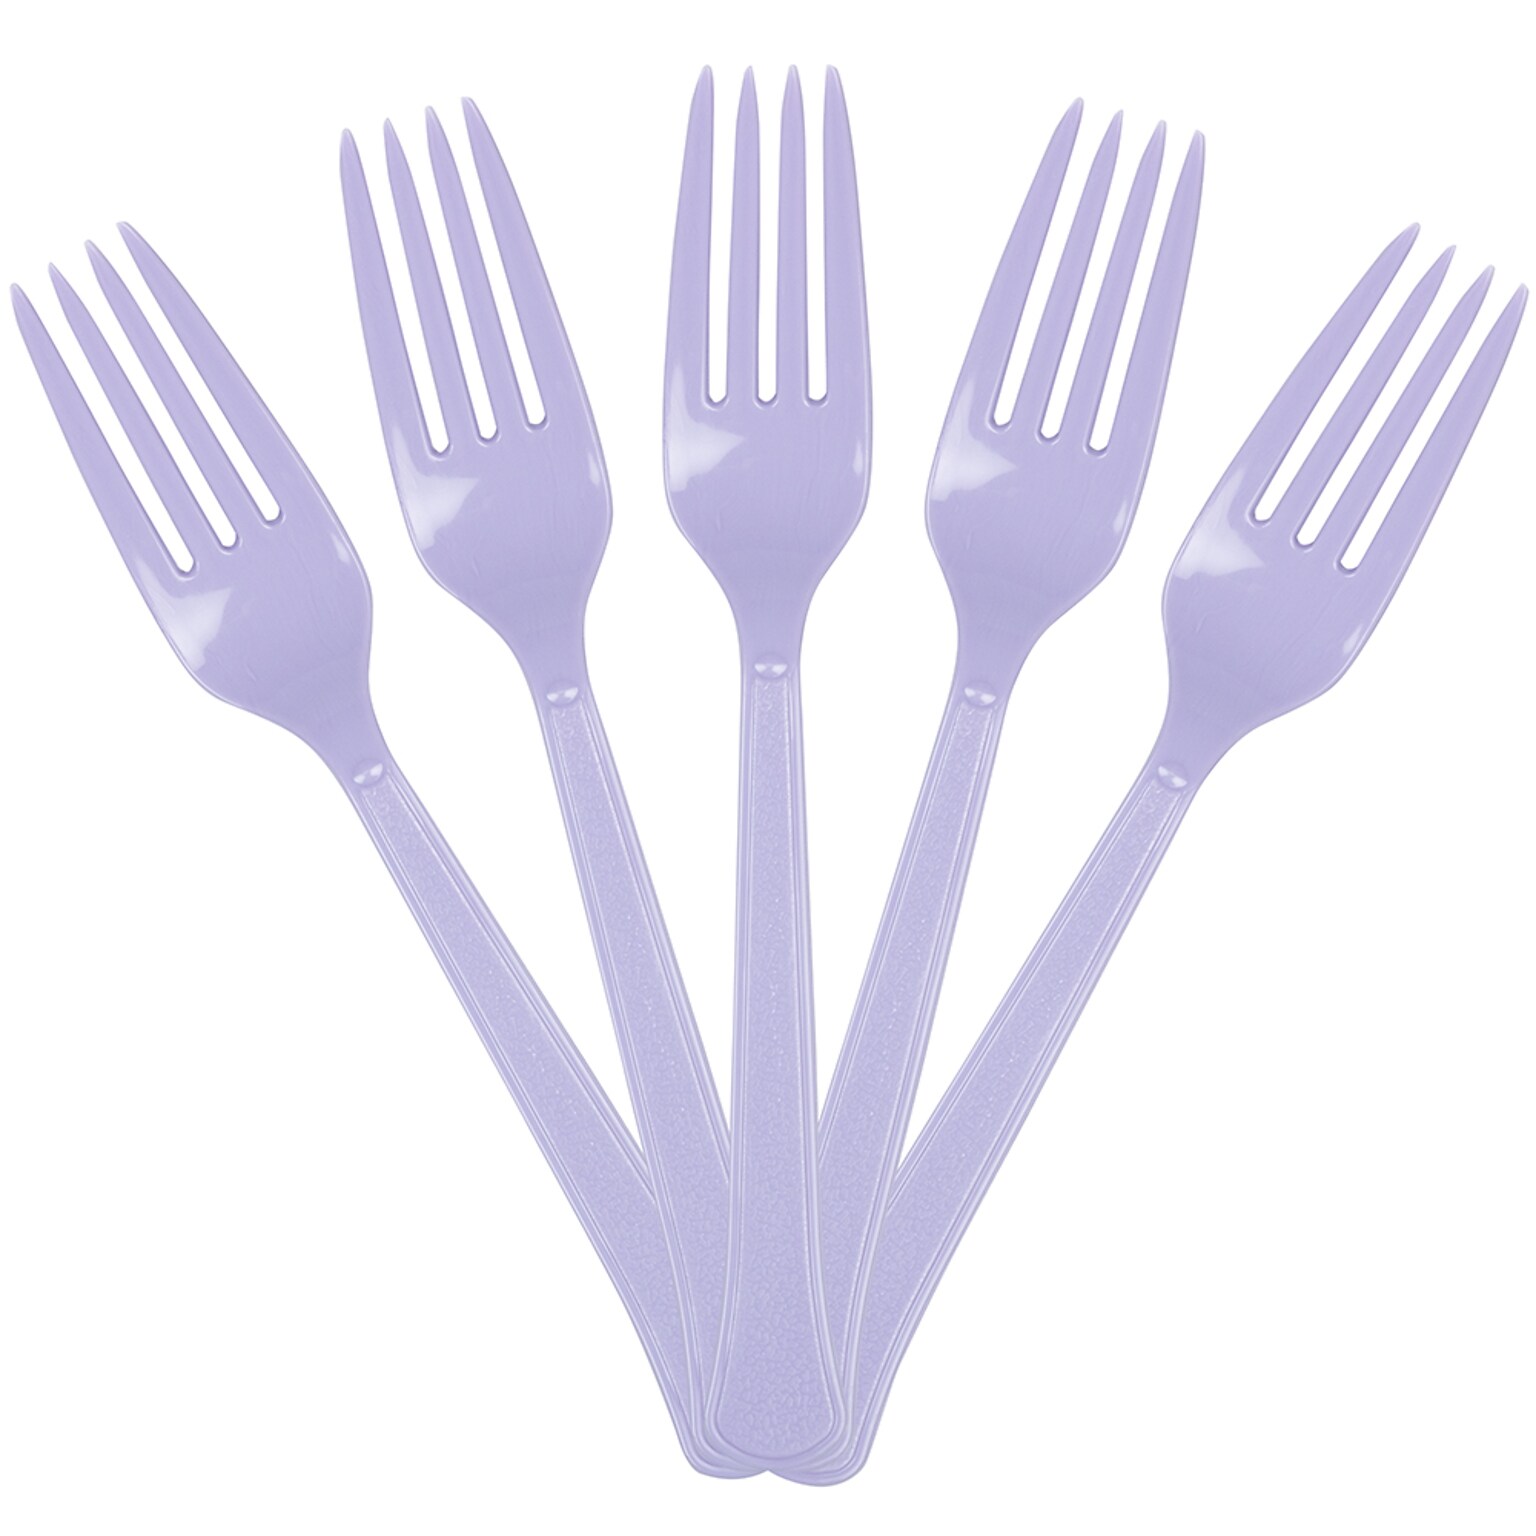 JAM PAPER Premium Utensils Party Pack, Plastic Forks, Light Purple / Lilac, 48 Disposable Forks/Pack